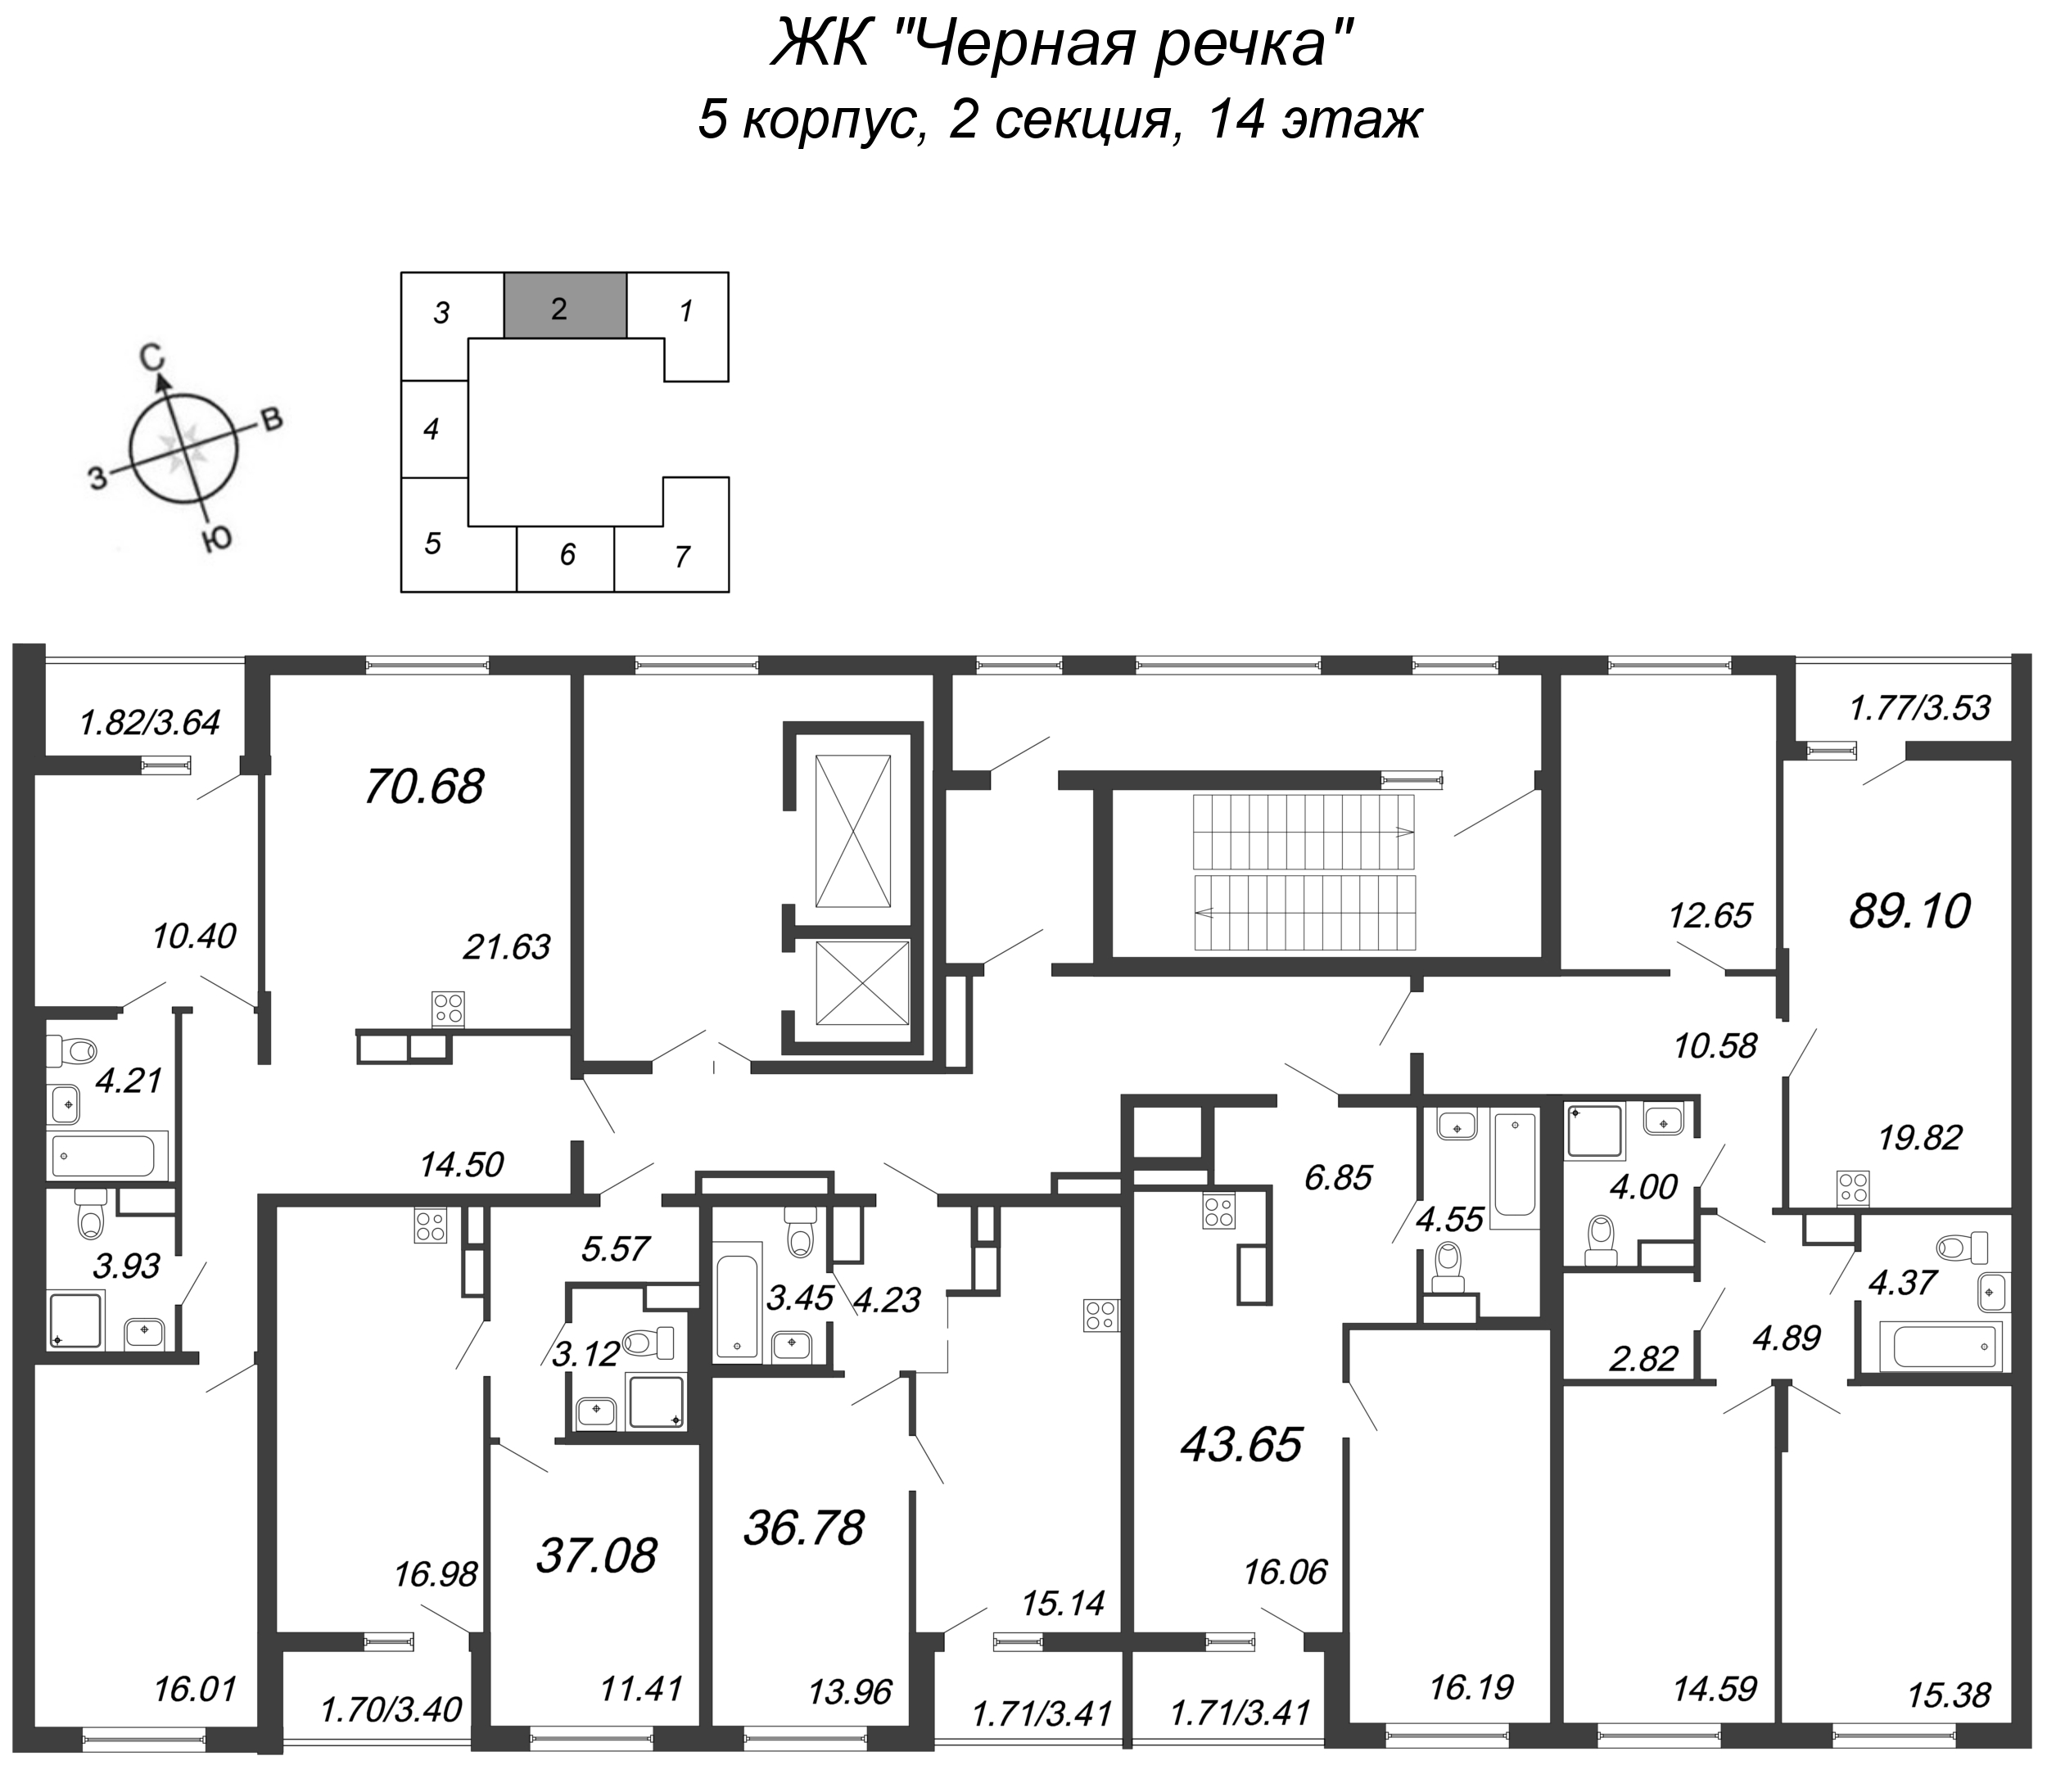 2-комнатная (Евро) квартира, 43.65 м² - планировка этажа